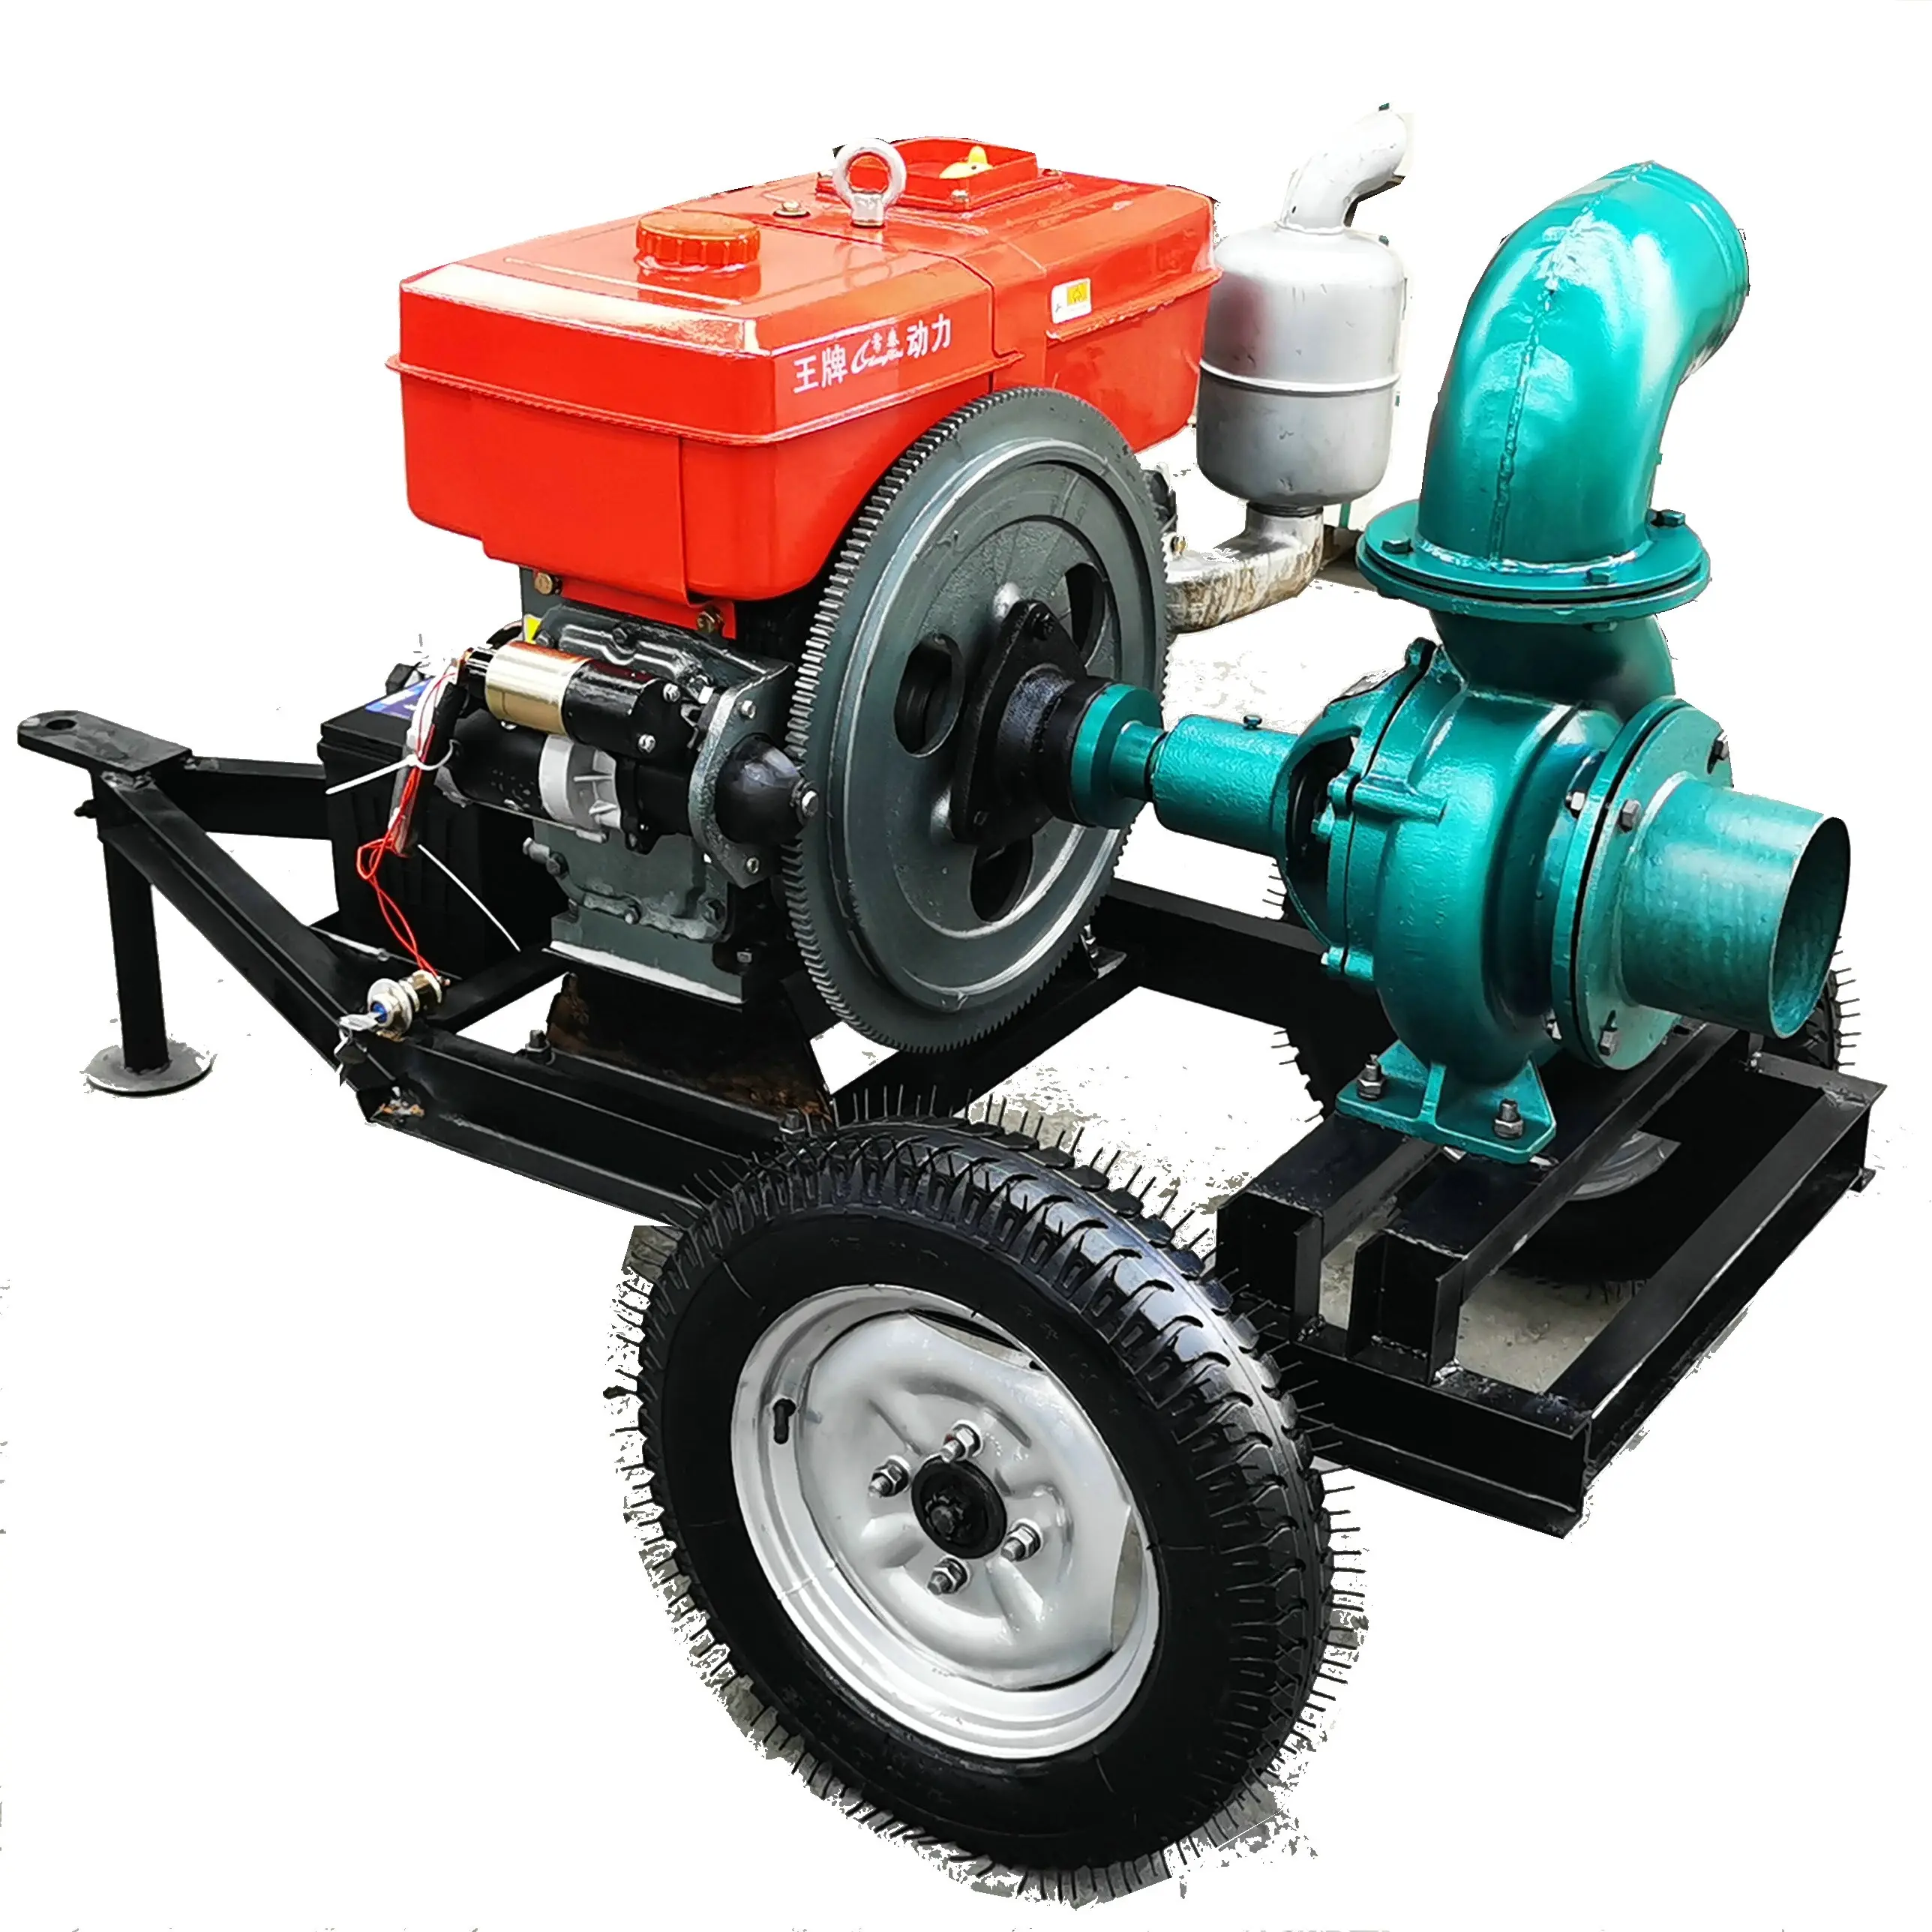 Pompa sentrifugal mesin Diesel 4 inci seri NS portabel irigasi pertanian pompa sentrifugal Self-Priming